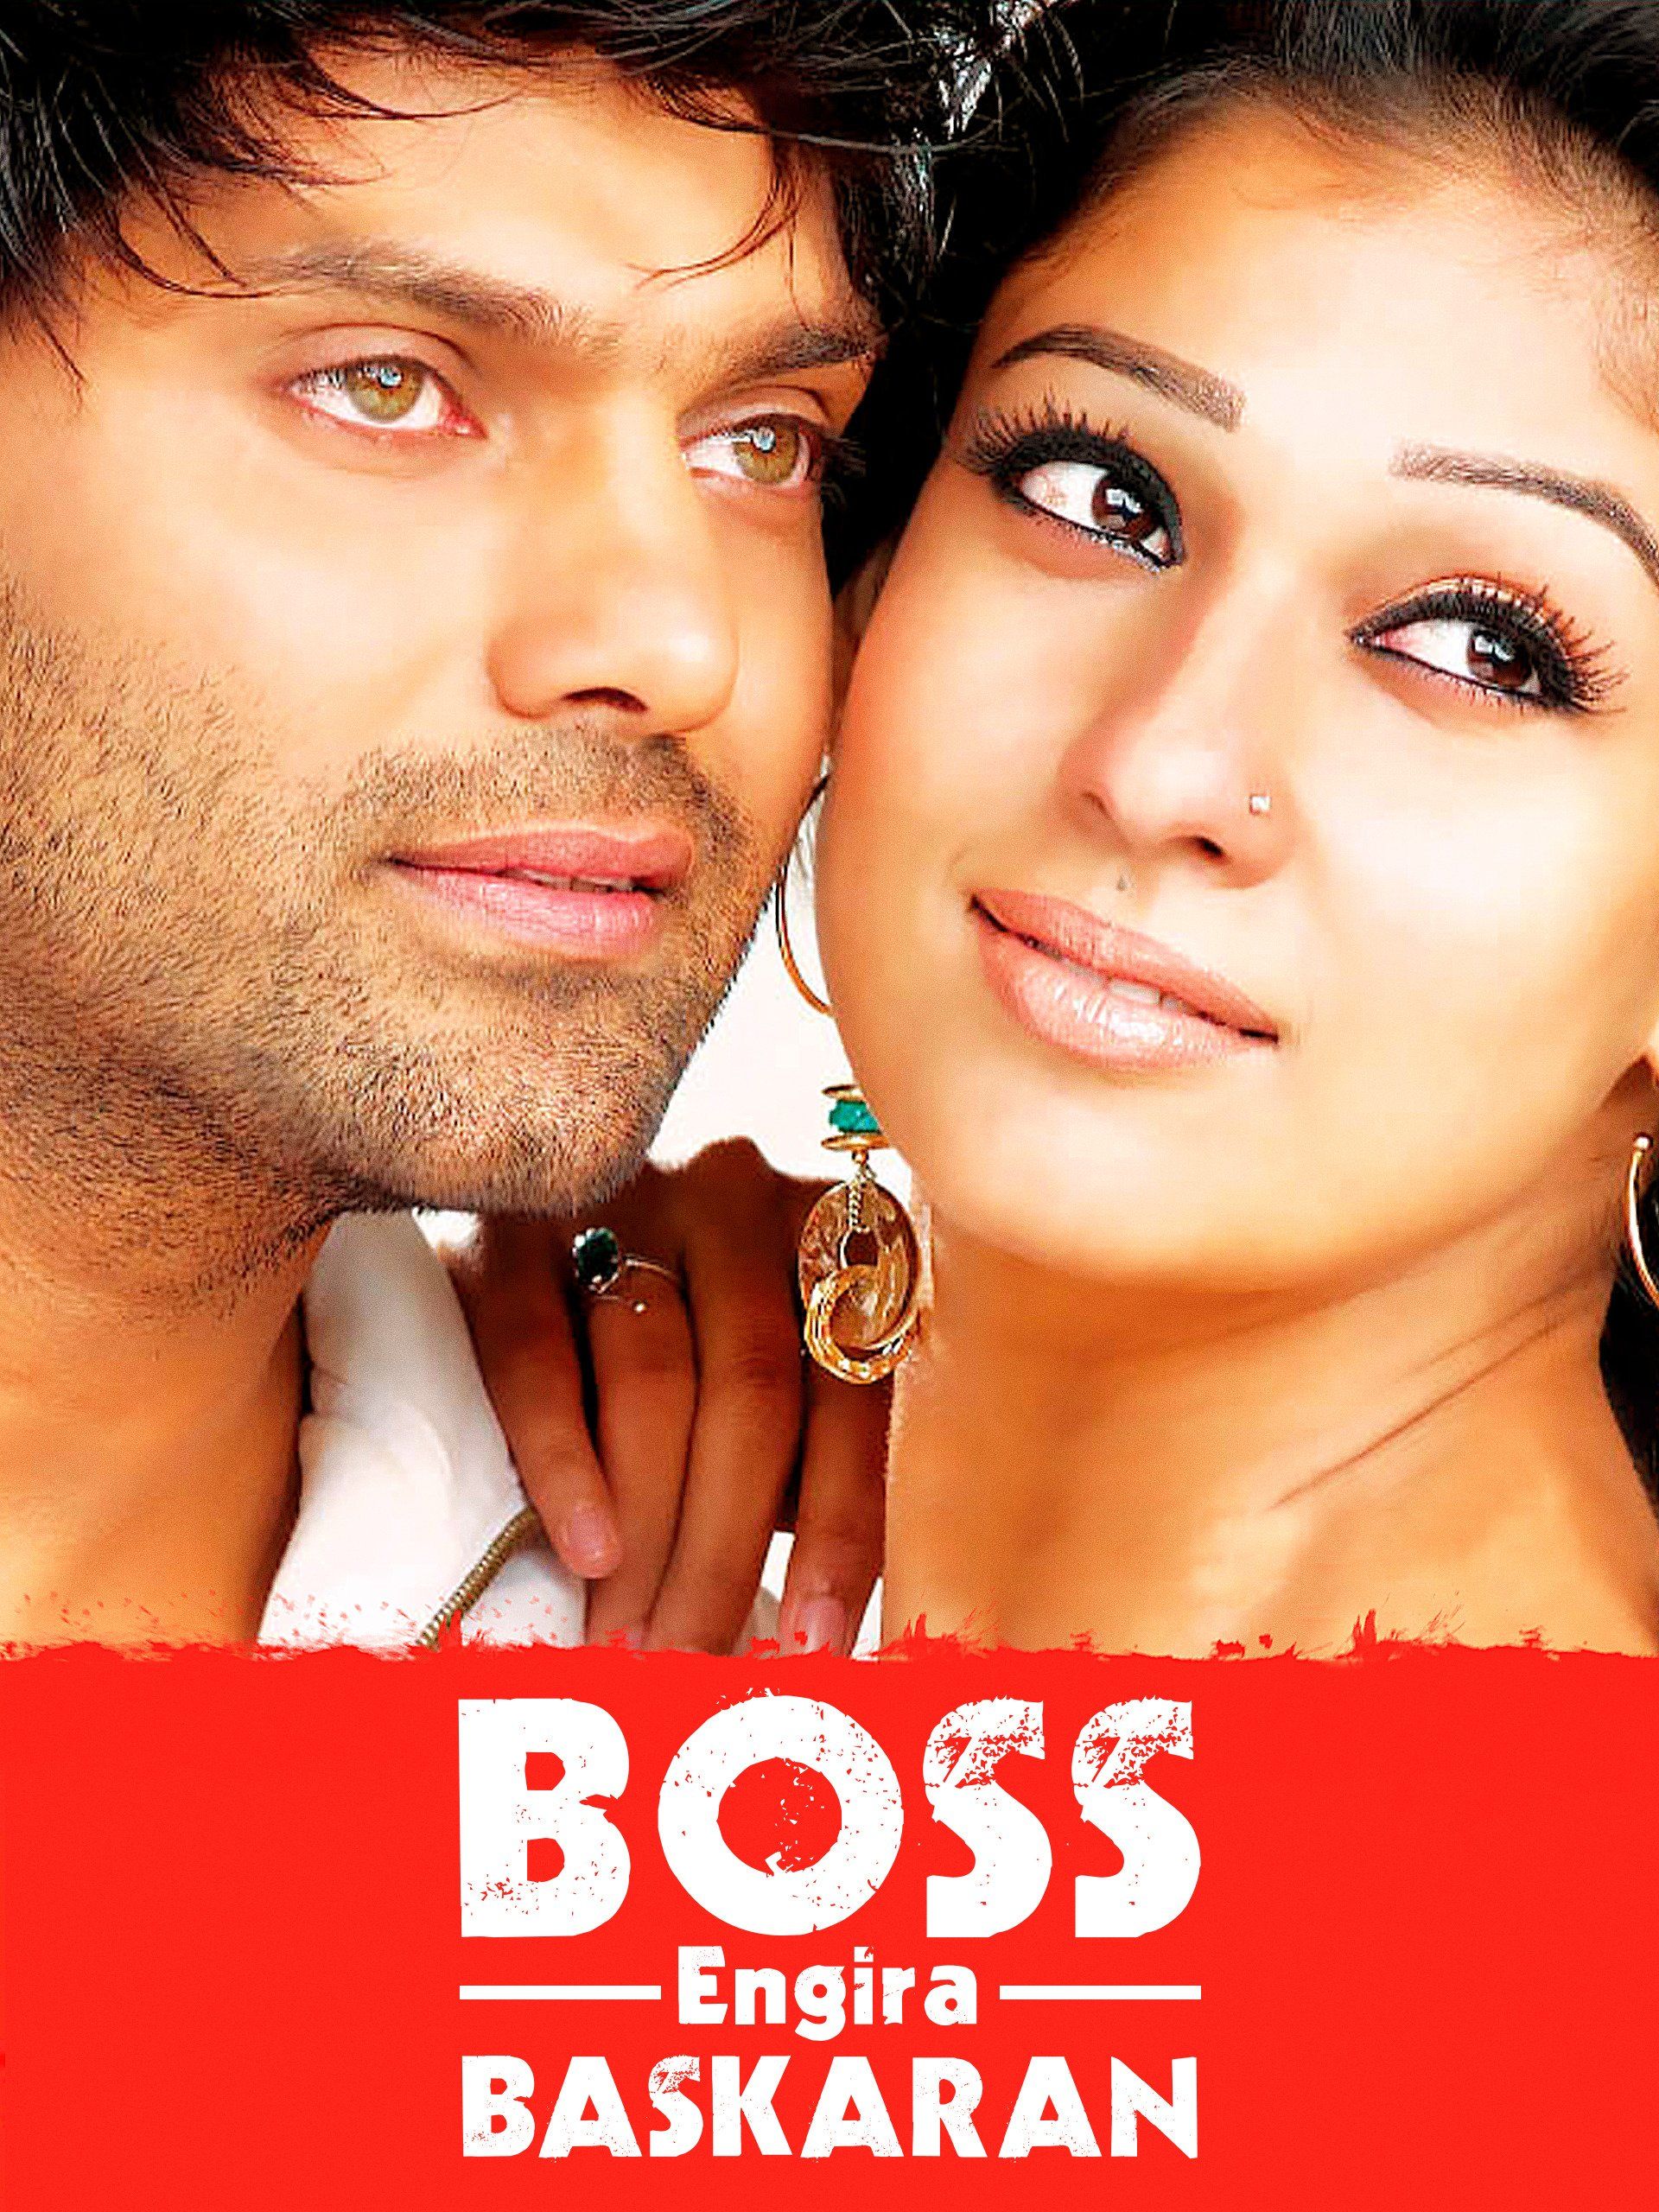 Boss Engira Baskaran (2010) Hindi Dubbed HDRip download full movie